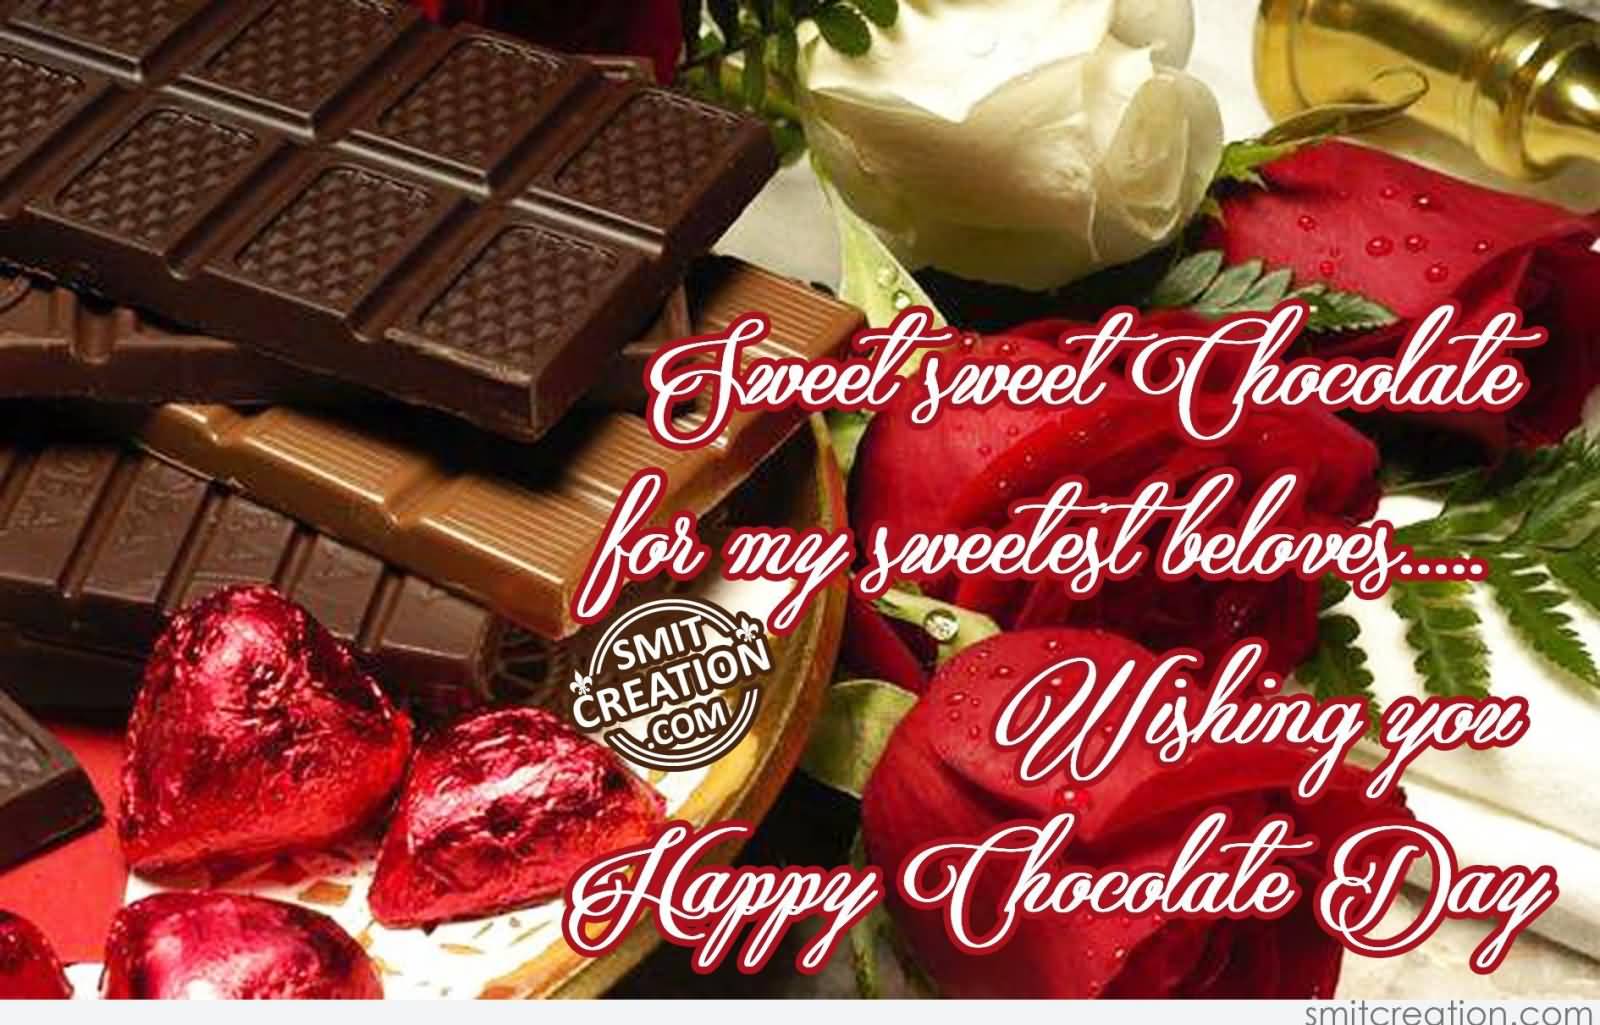 Wishing You Happy Chocolate Day